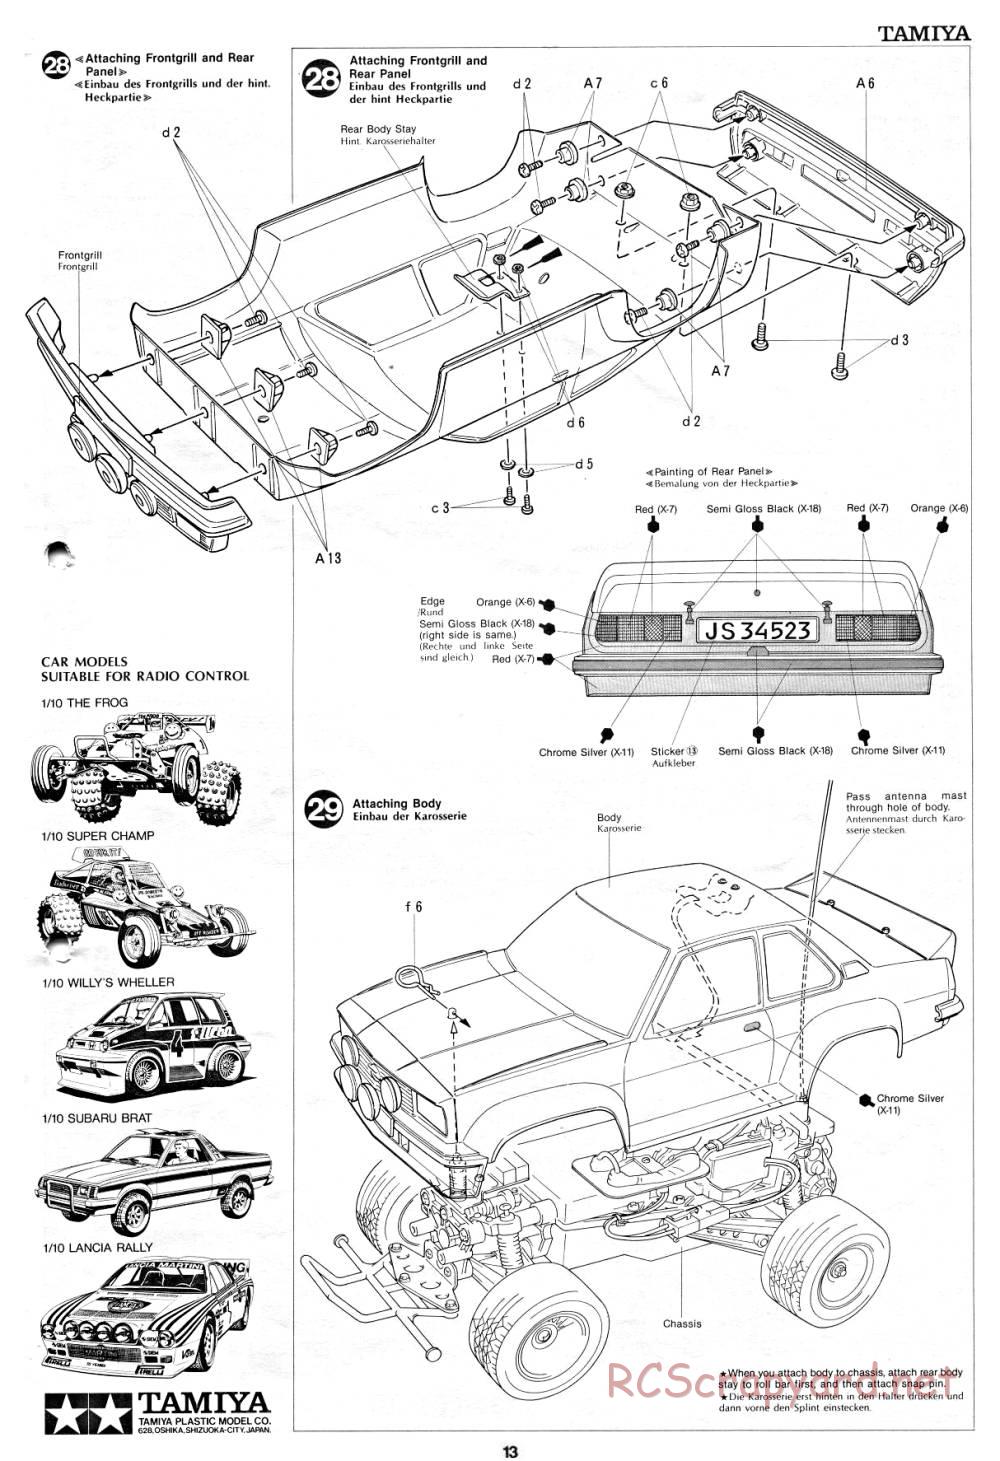 Tamiya - Opel Ascona 400 Rally - 58037 - Manual - Page 13